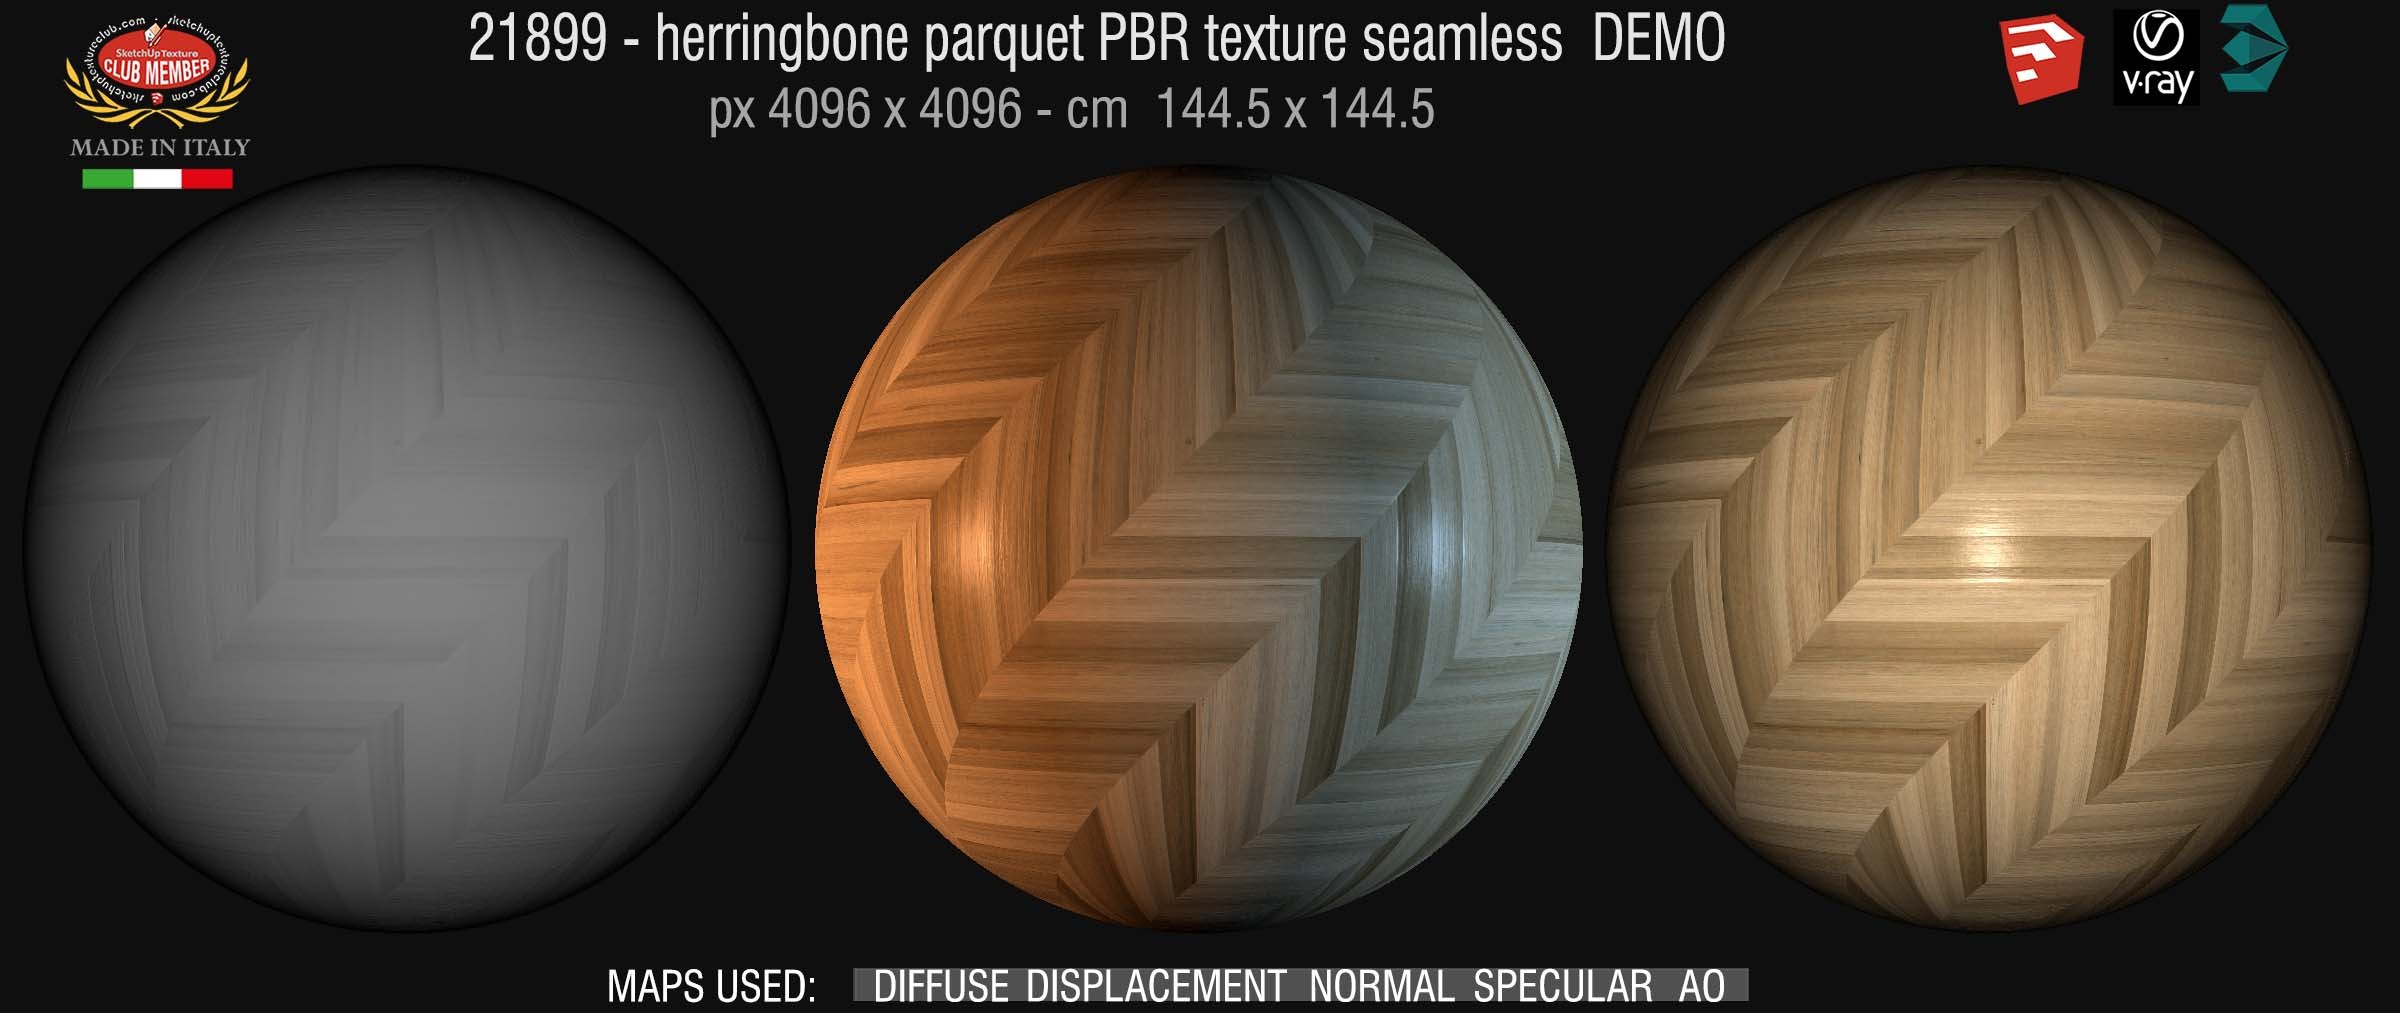 21899 herringbone parquet PBR texture seamless DEMO